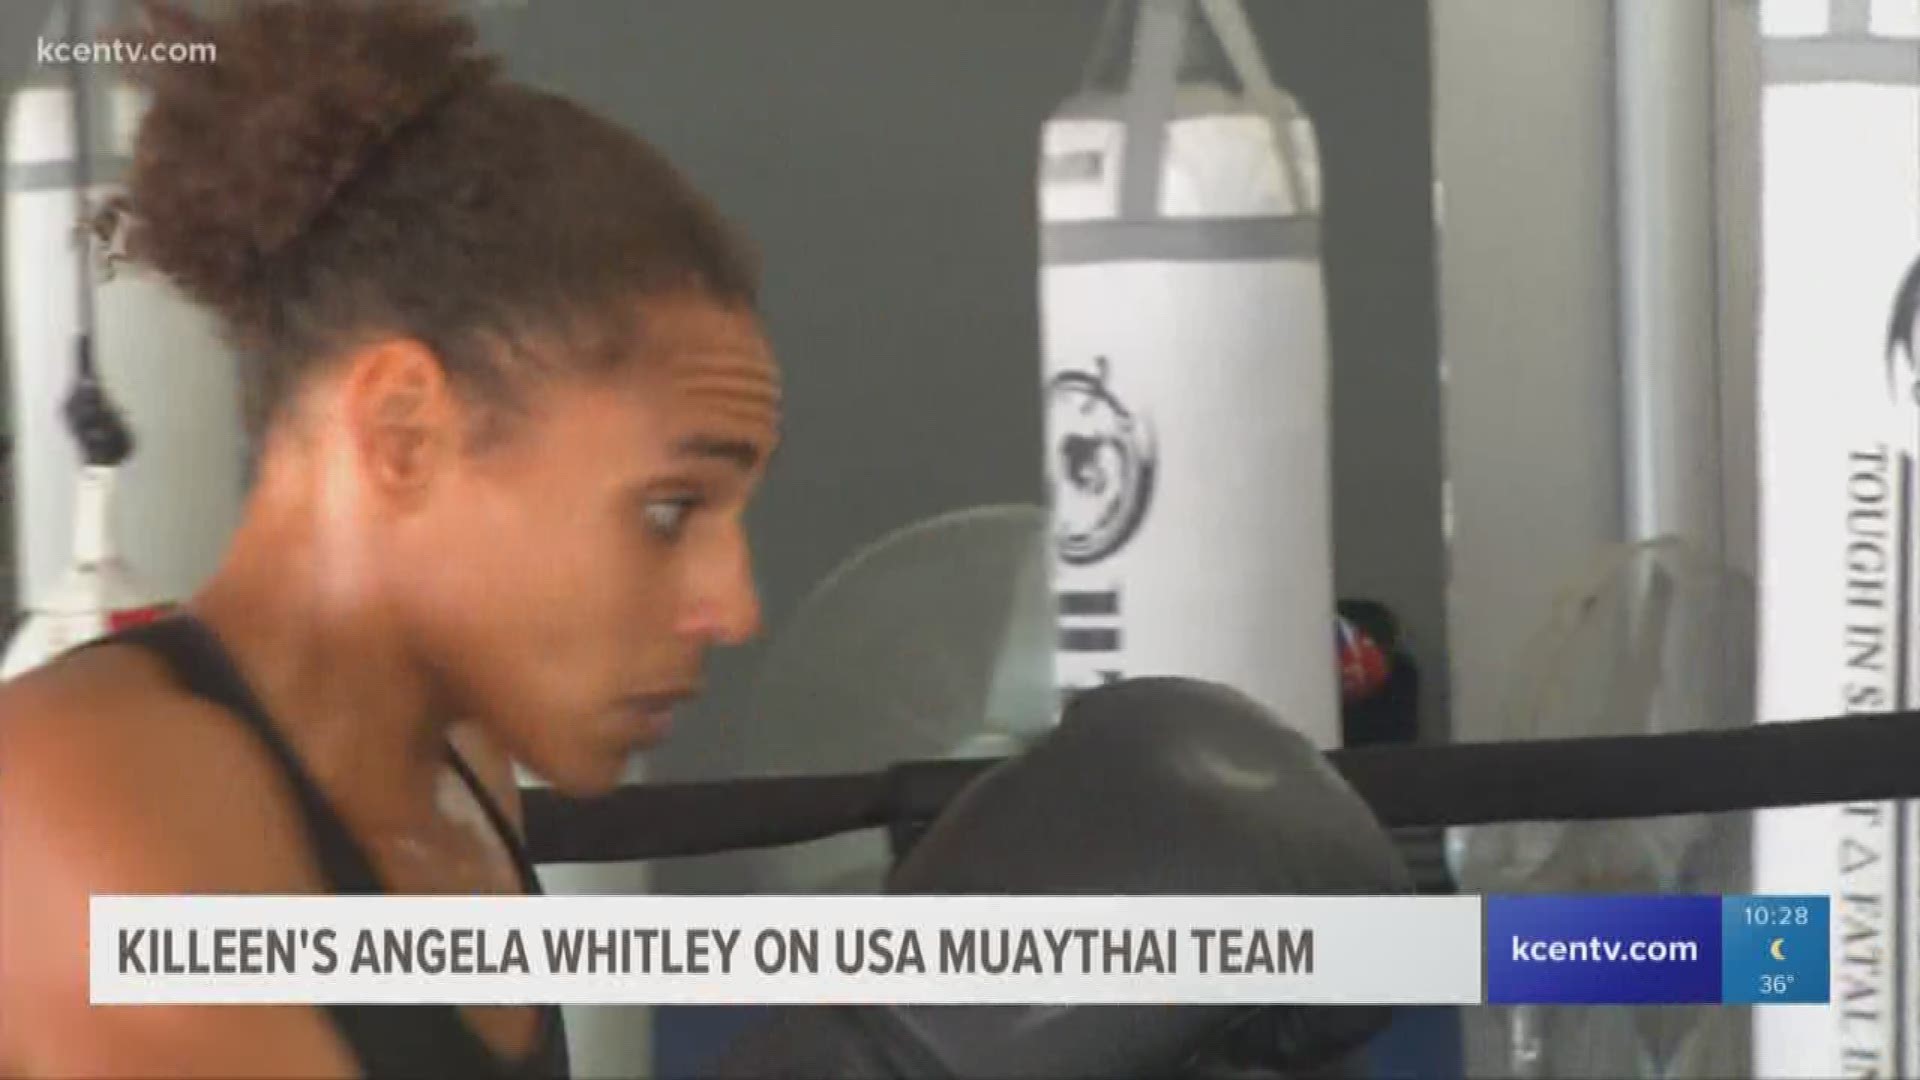 Killeen's Angela Whitley on USA muaythai team